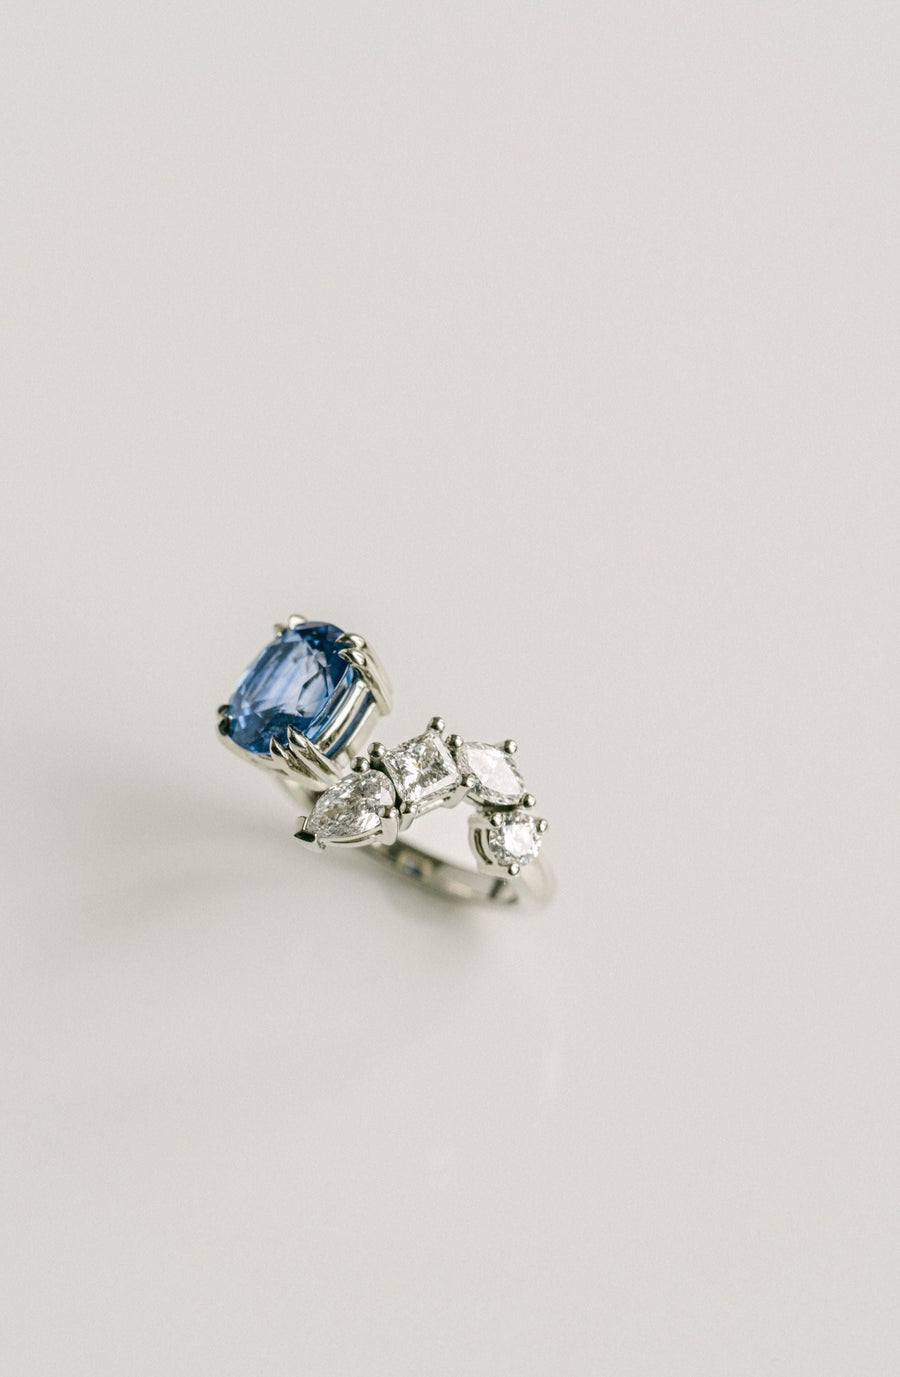 Cushion Cut Blue Sri Lankan Sapphire Gap Ring With Diamonds, 14k White Gold